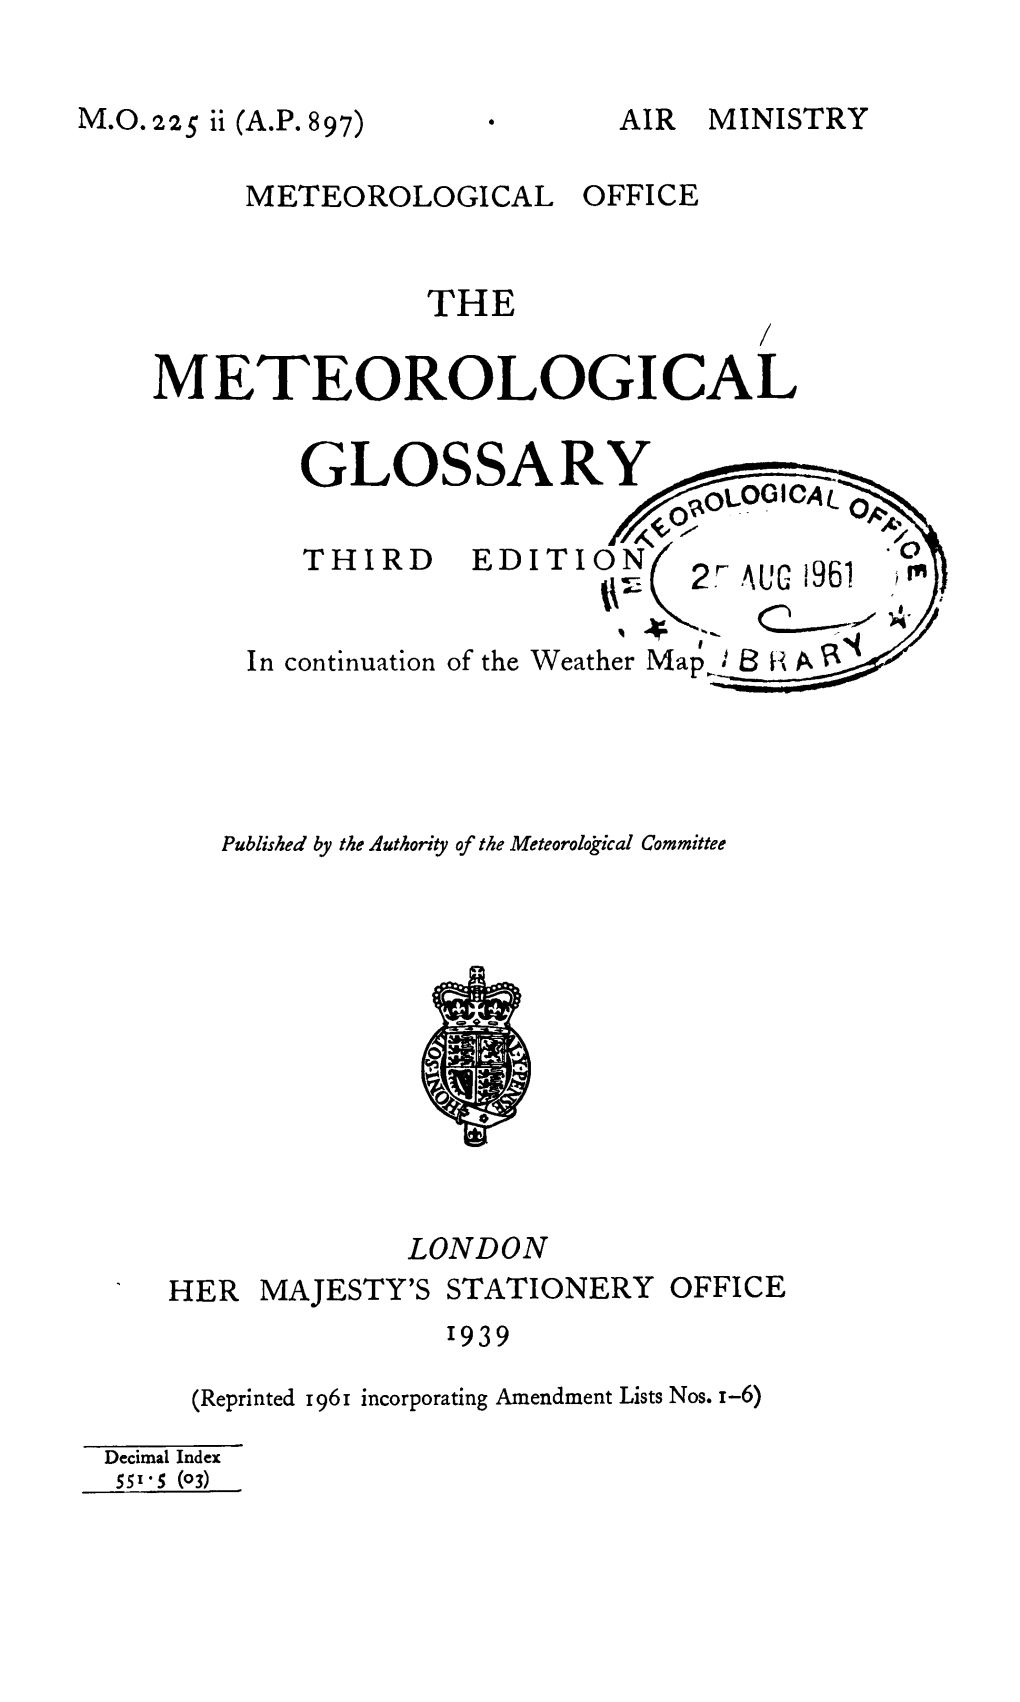 Meteorological Glossary